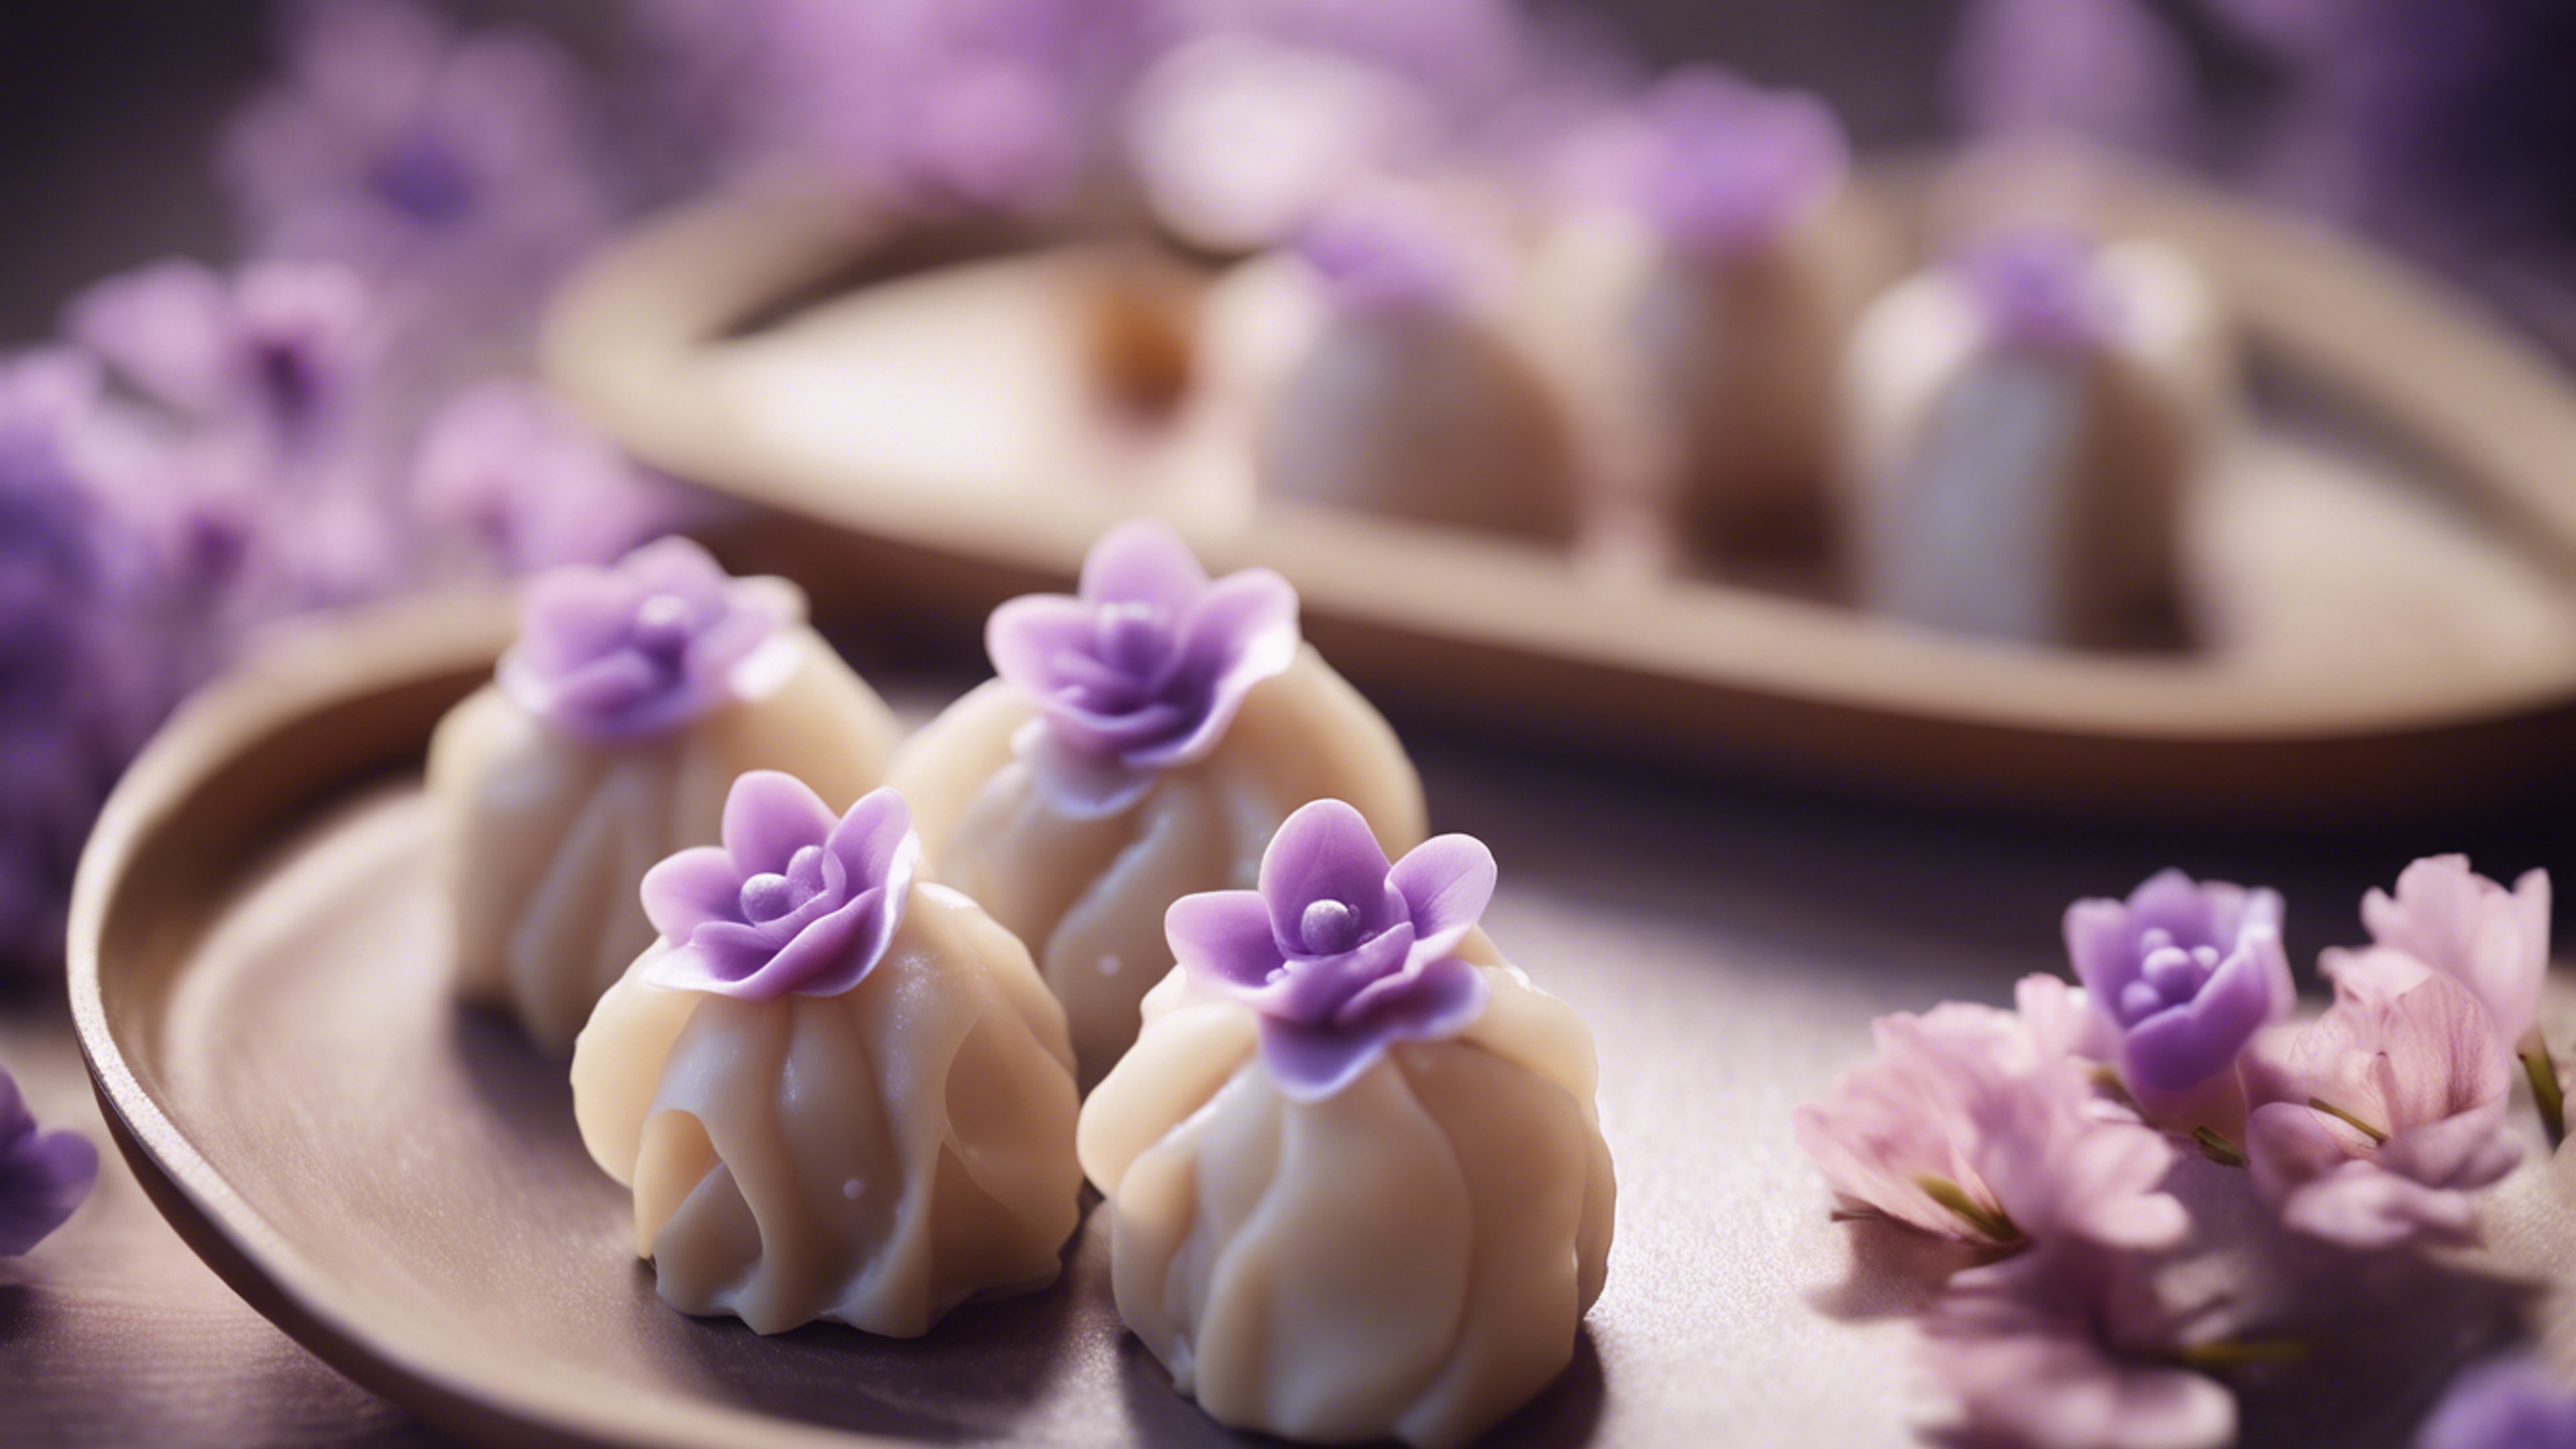 A kawaii styled dim sum dish, with delicate and light purple dumplings shaped like flowers. Wallpaper[29e111c9b013403690b4]